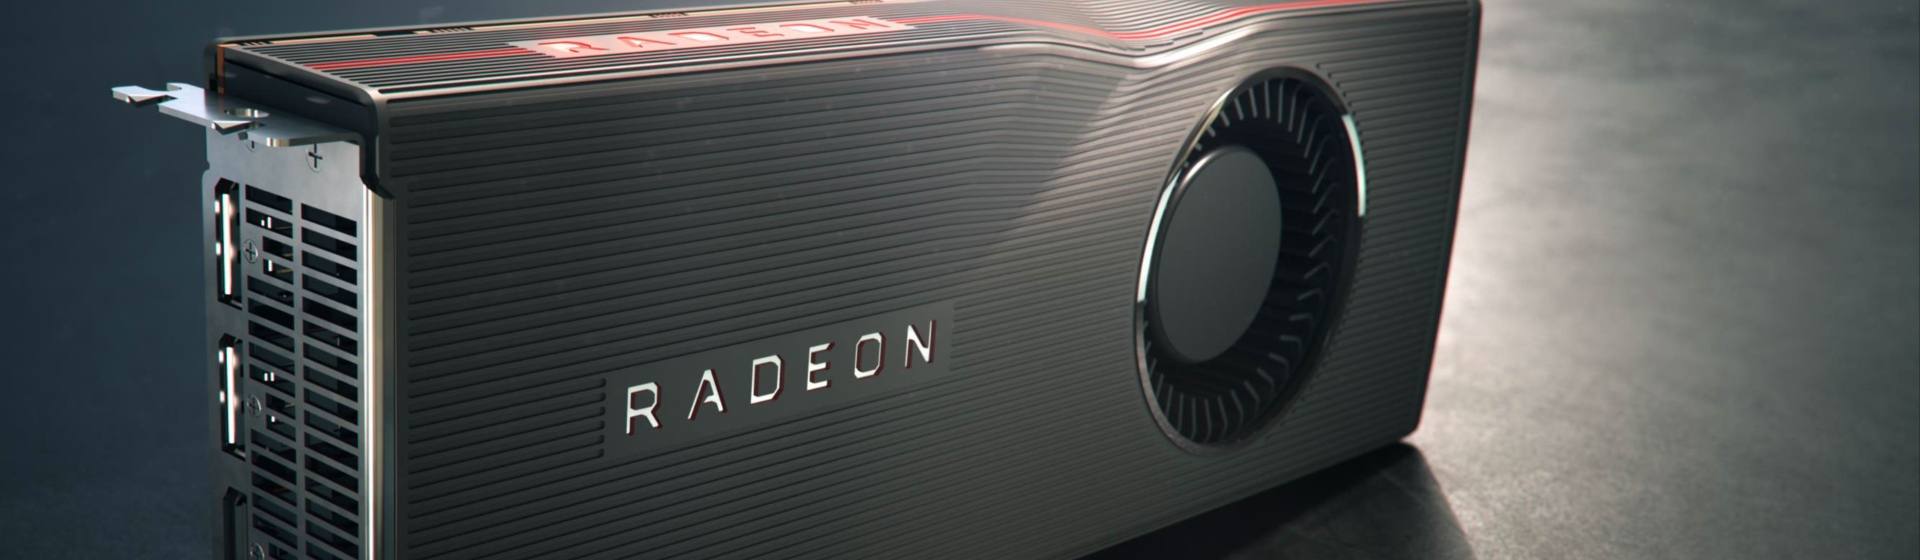 AMD Radeon 5700XT